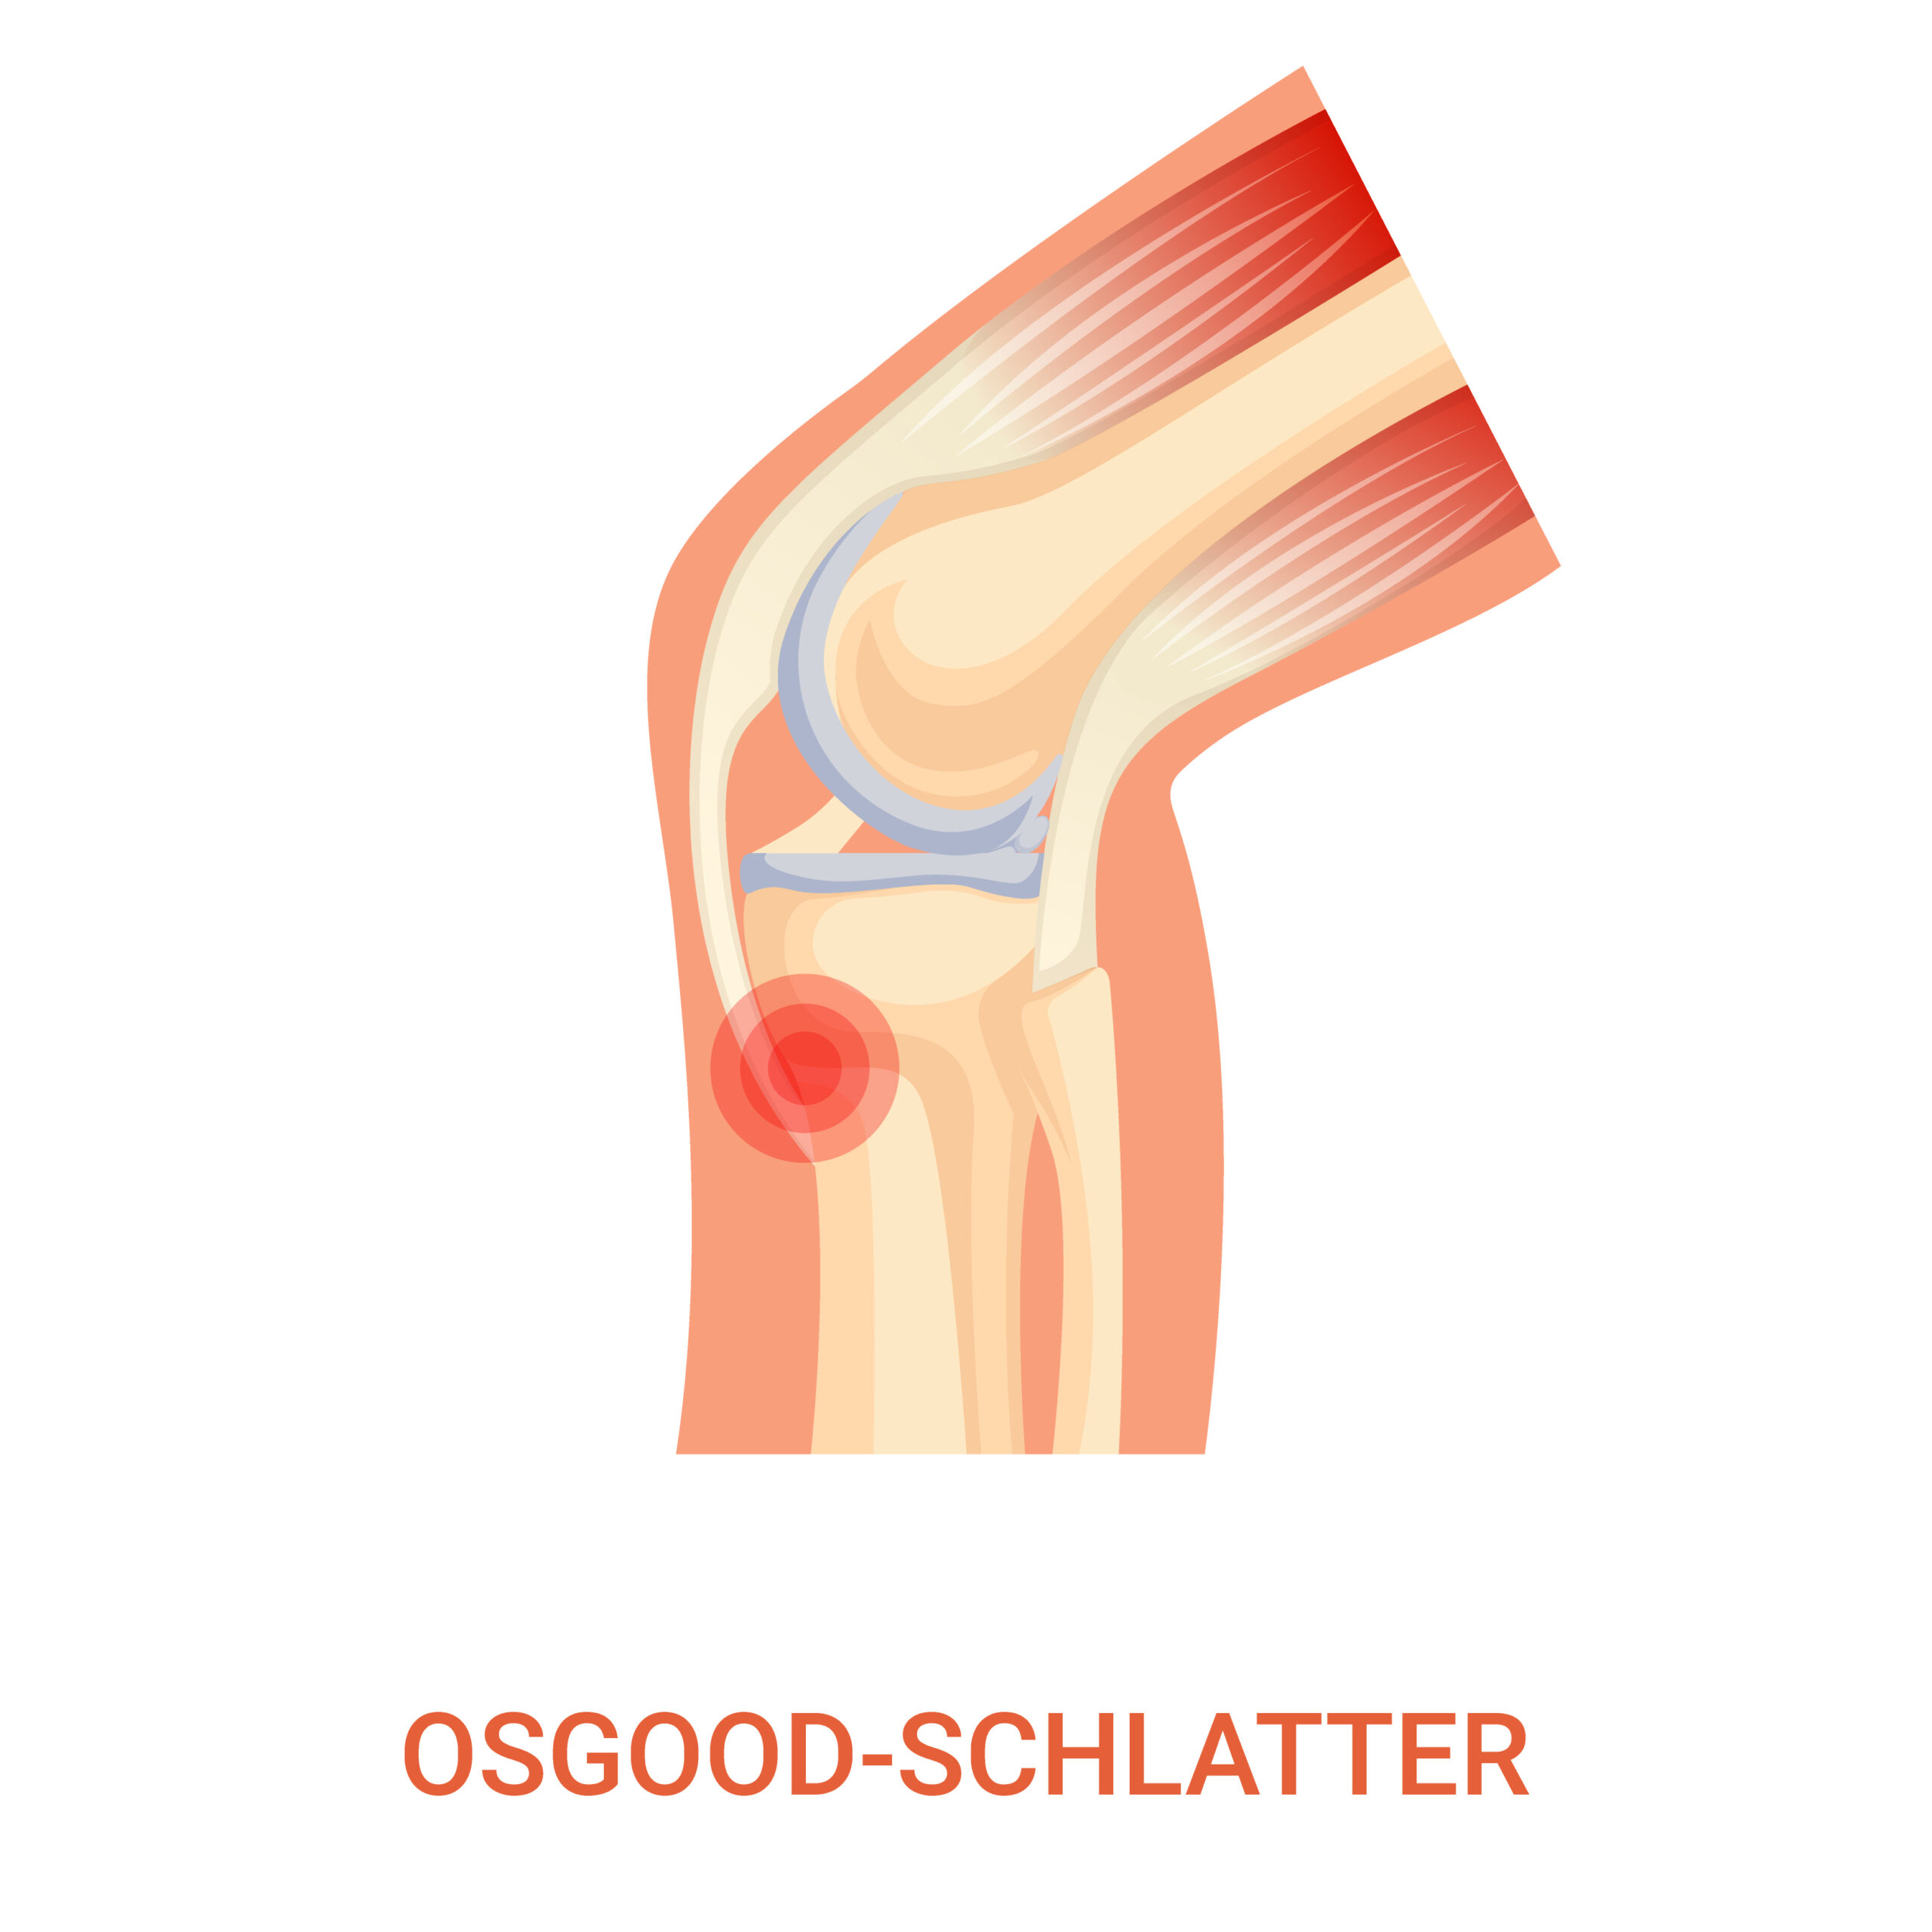 Osgood Schlatter’s Disease